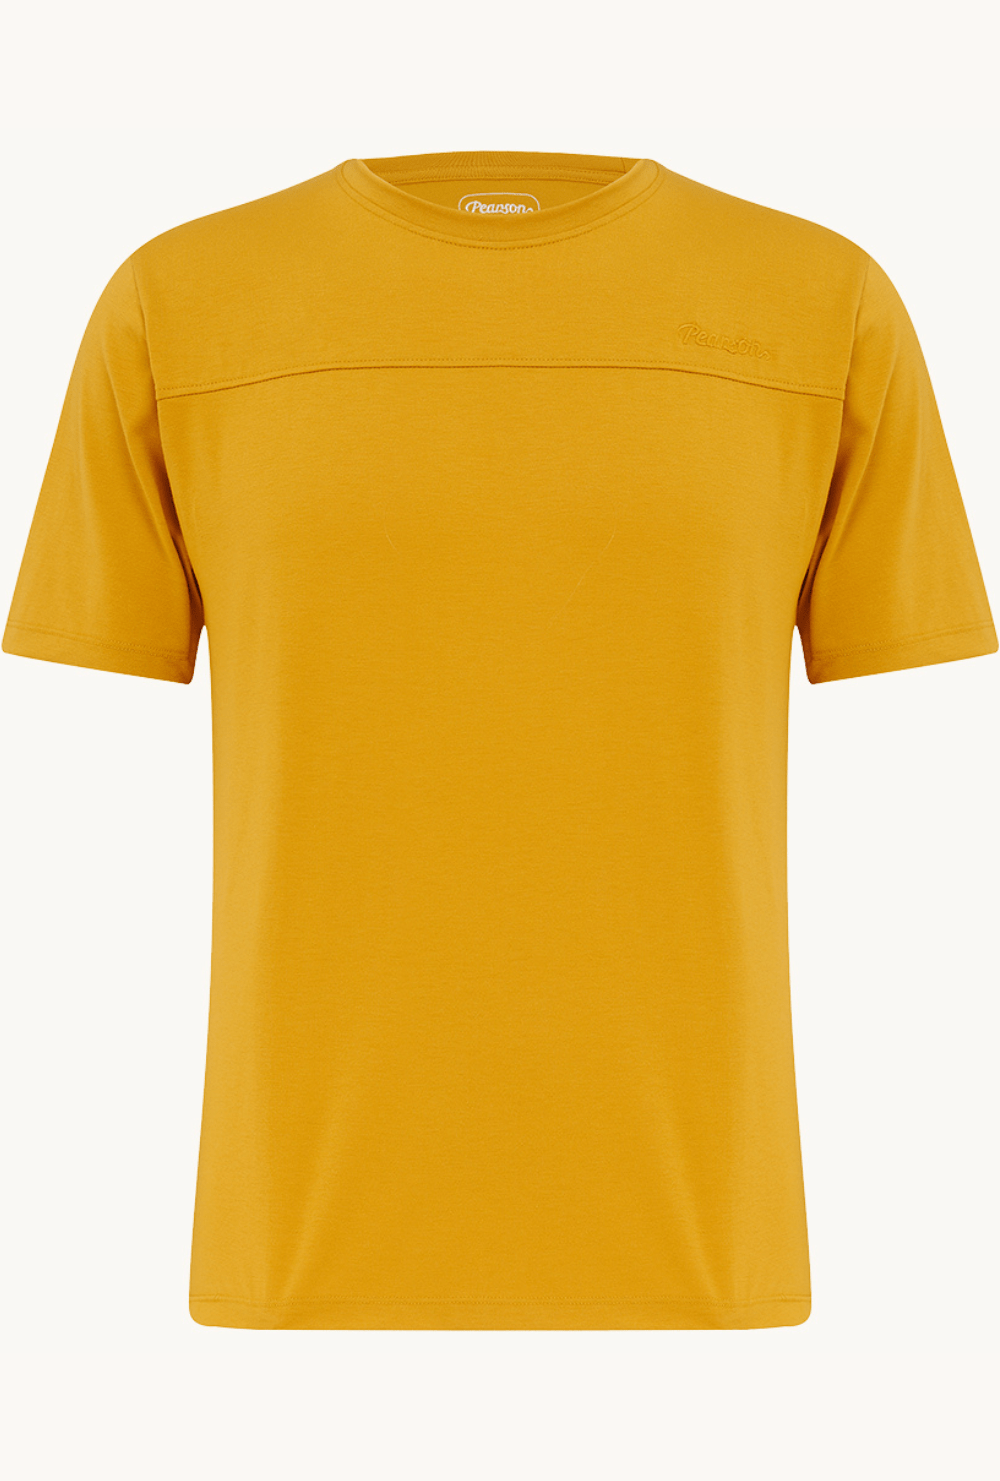 Pearson 1860  High DaysandHolidays - Cycling T-shirt Ochre  Ochre / Small